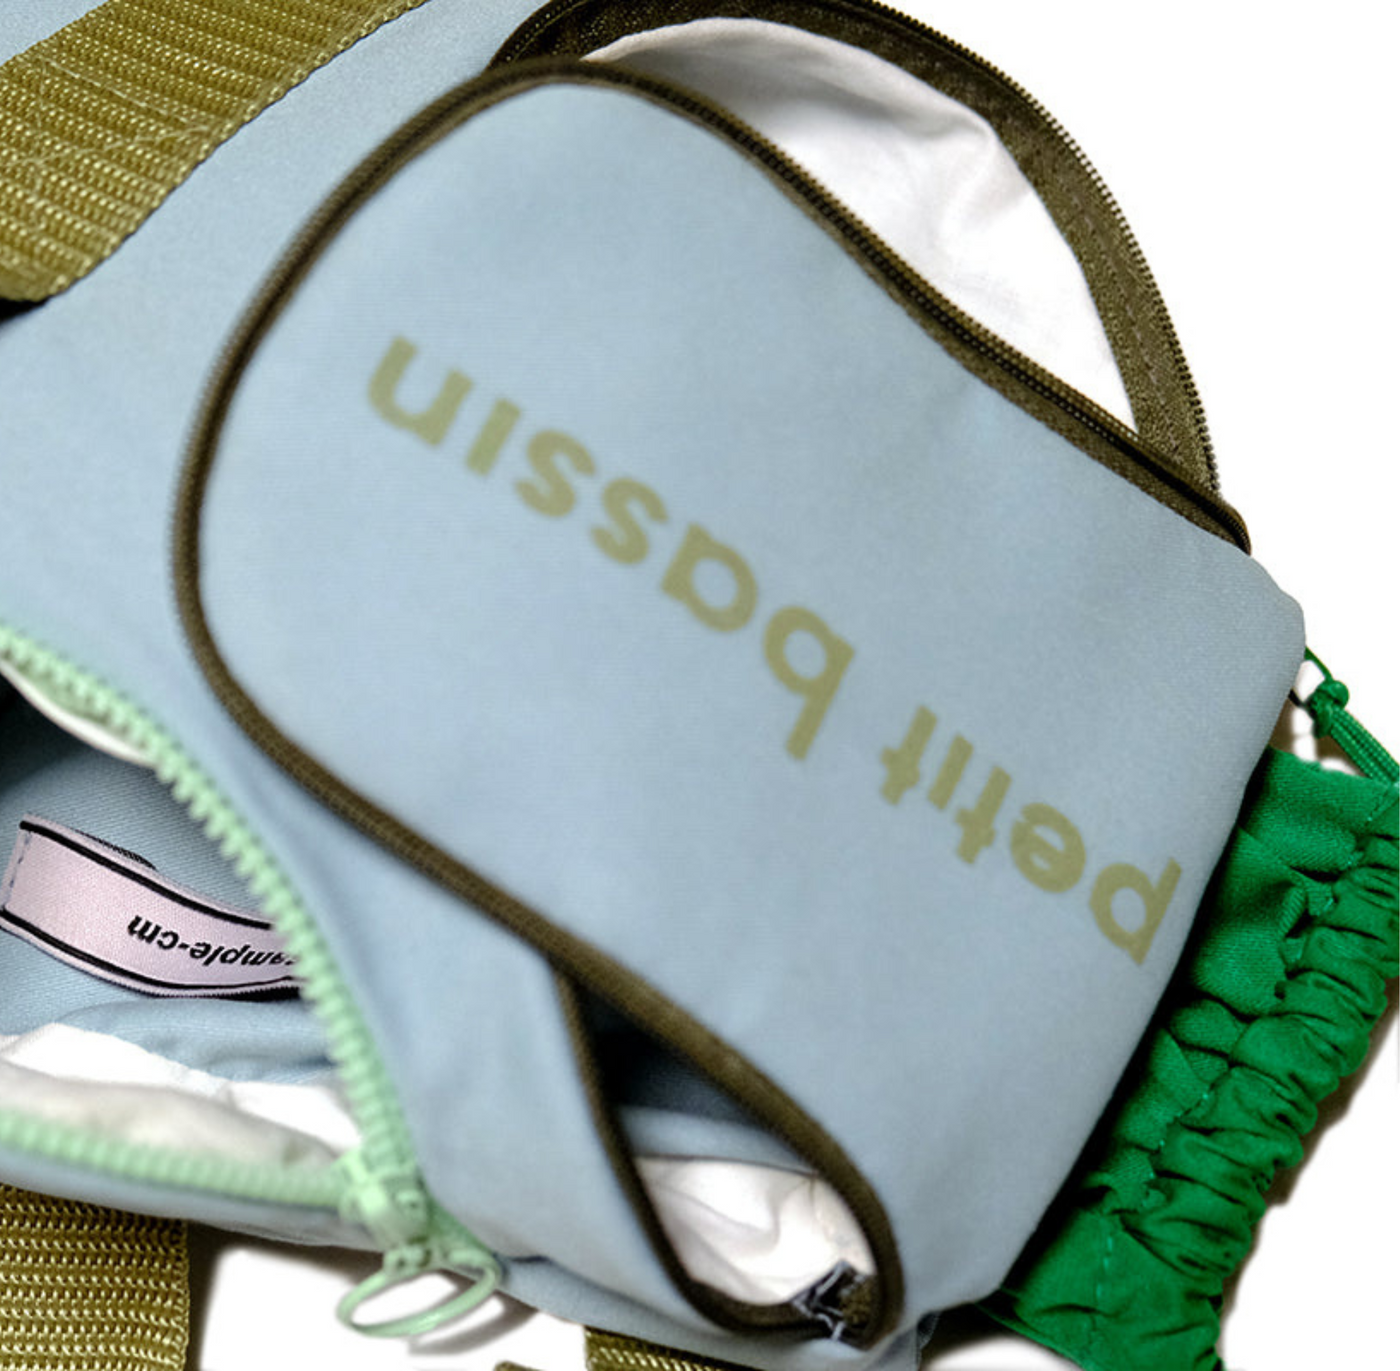 'PETIT BASSIN §6' Bag - Limited